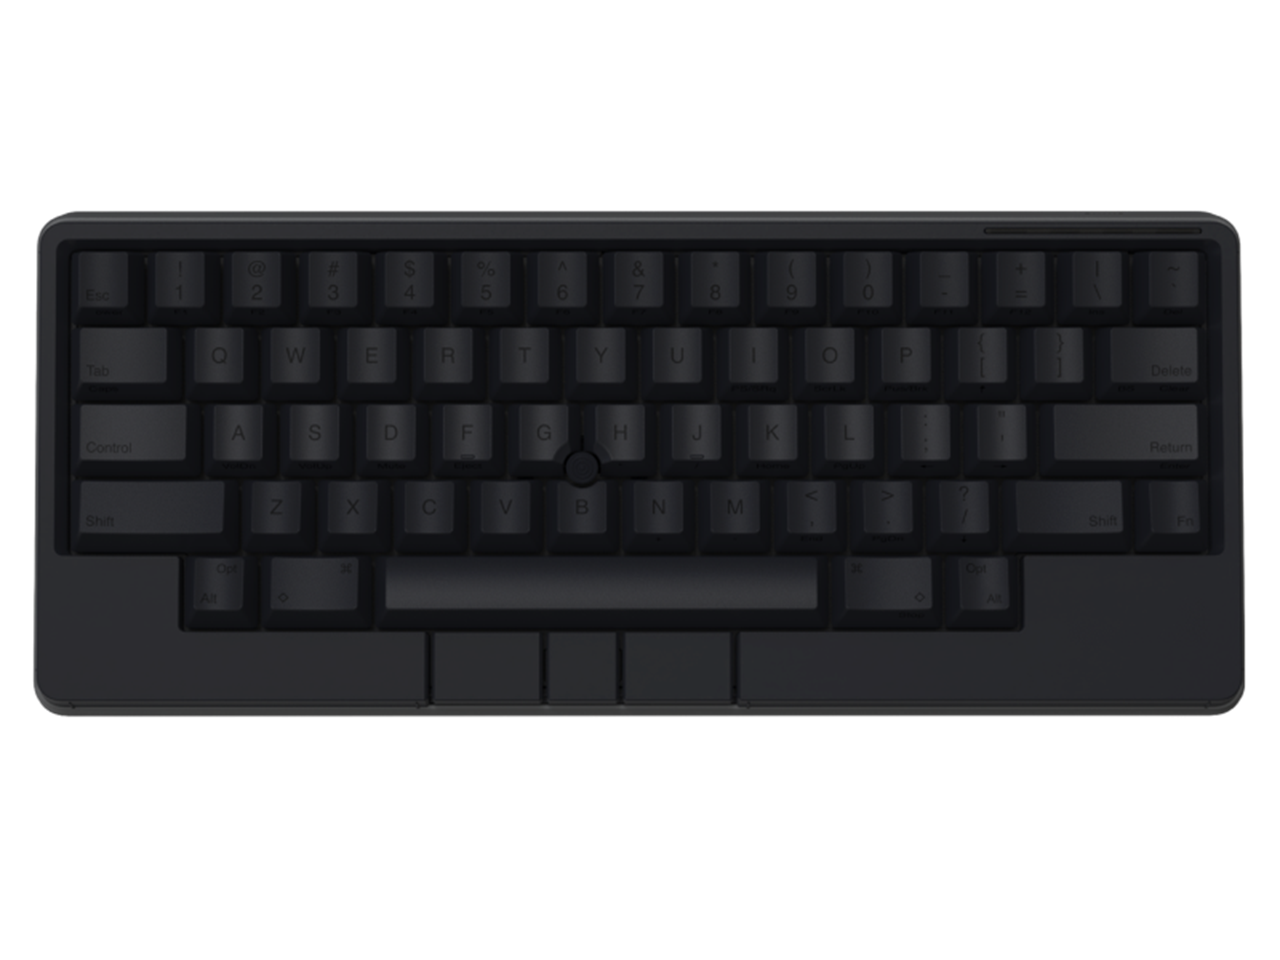 HHKB Studio - HHKB Studio All in One Keyboard - Portable, Customizable &  Compact Keyboard with Gesture Pads - HHKB & REALFORCE